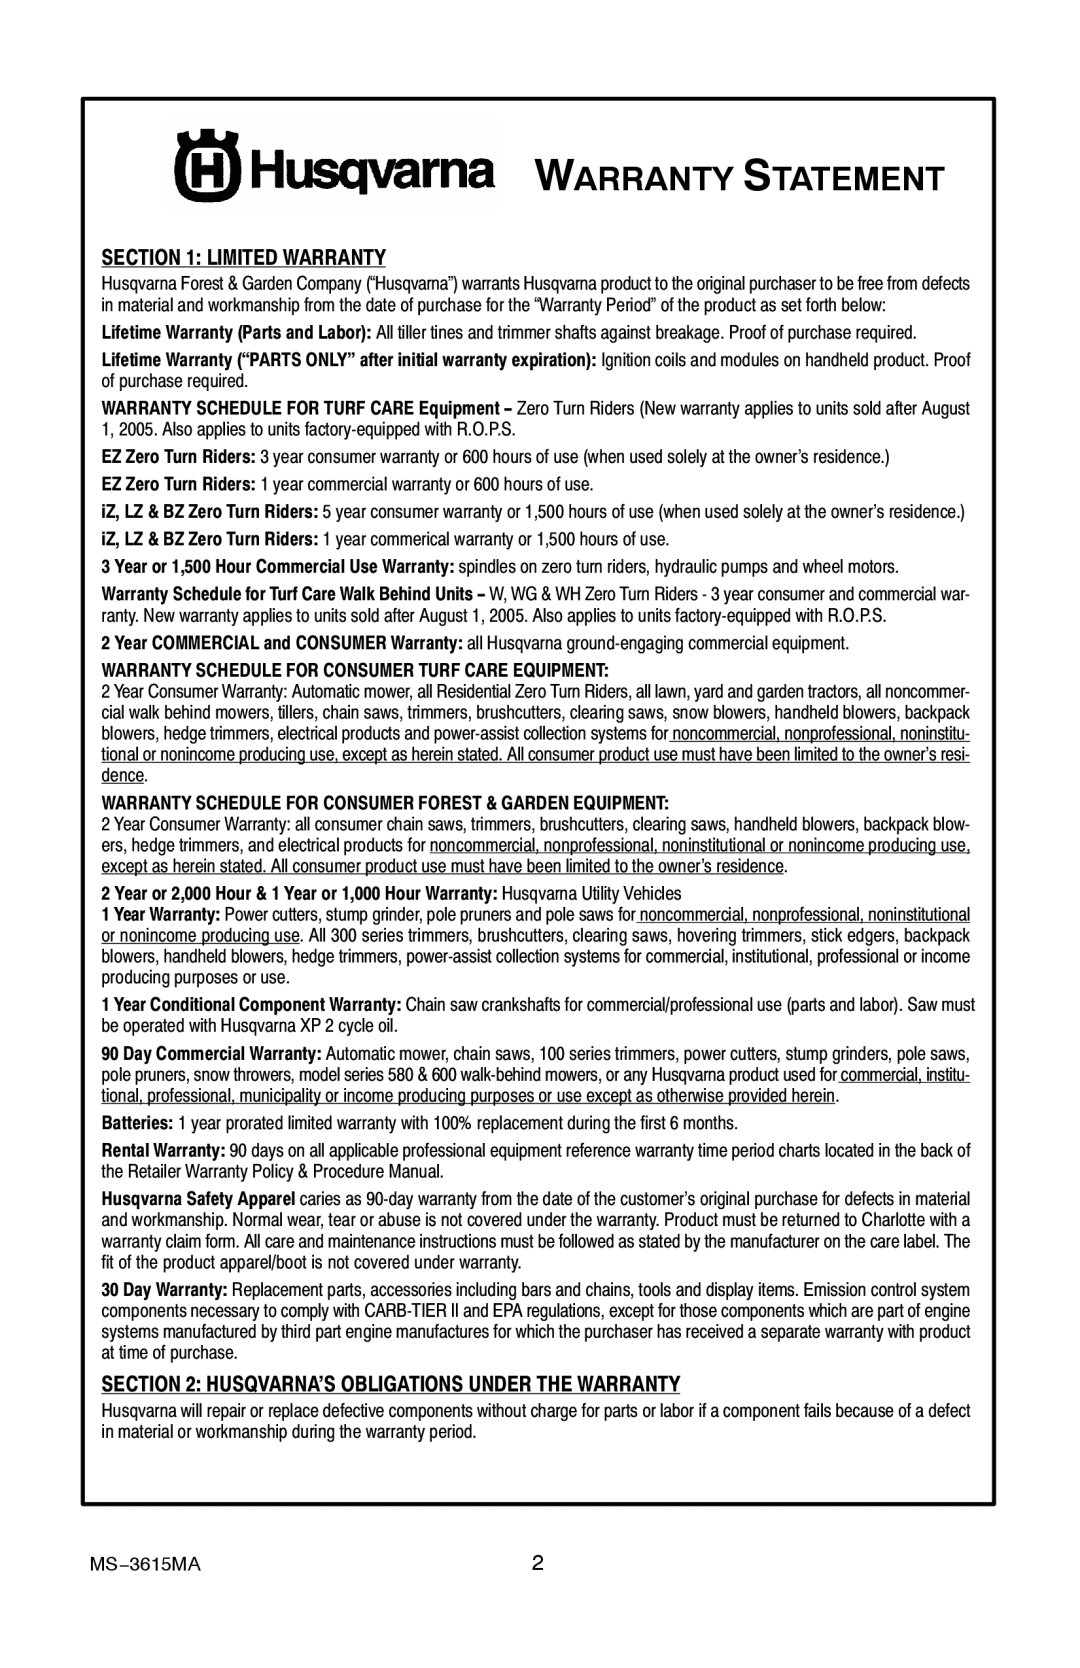 Husqvarna CT20 manual Warranty Statement, Limited Warranty 